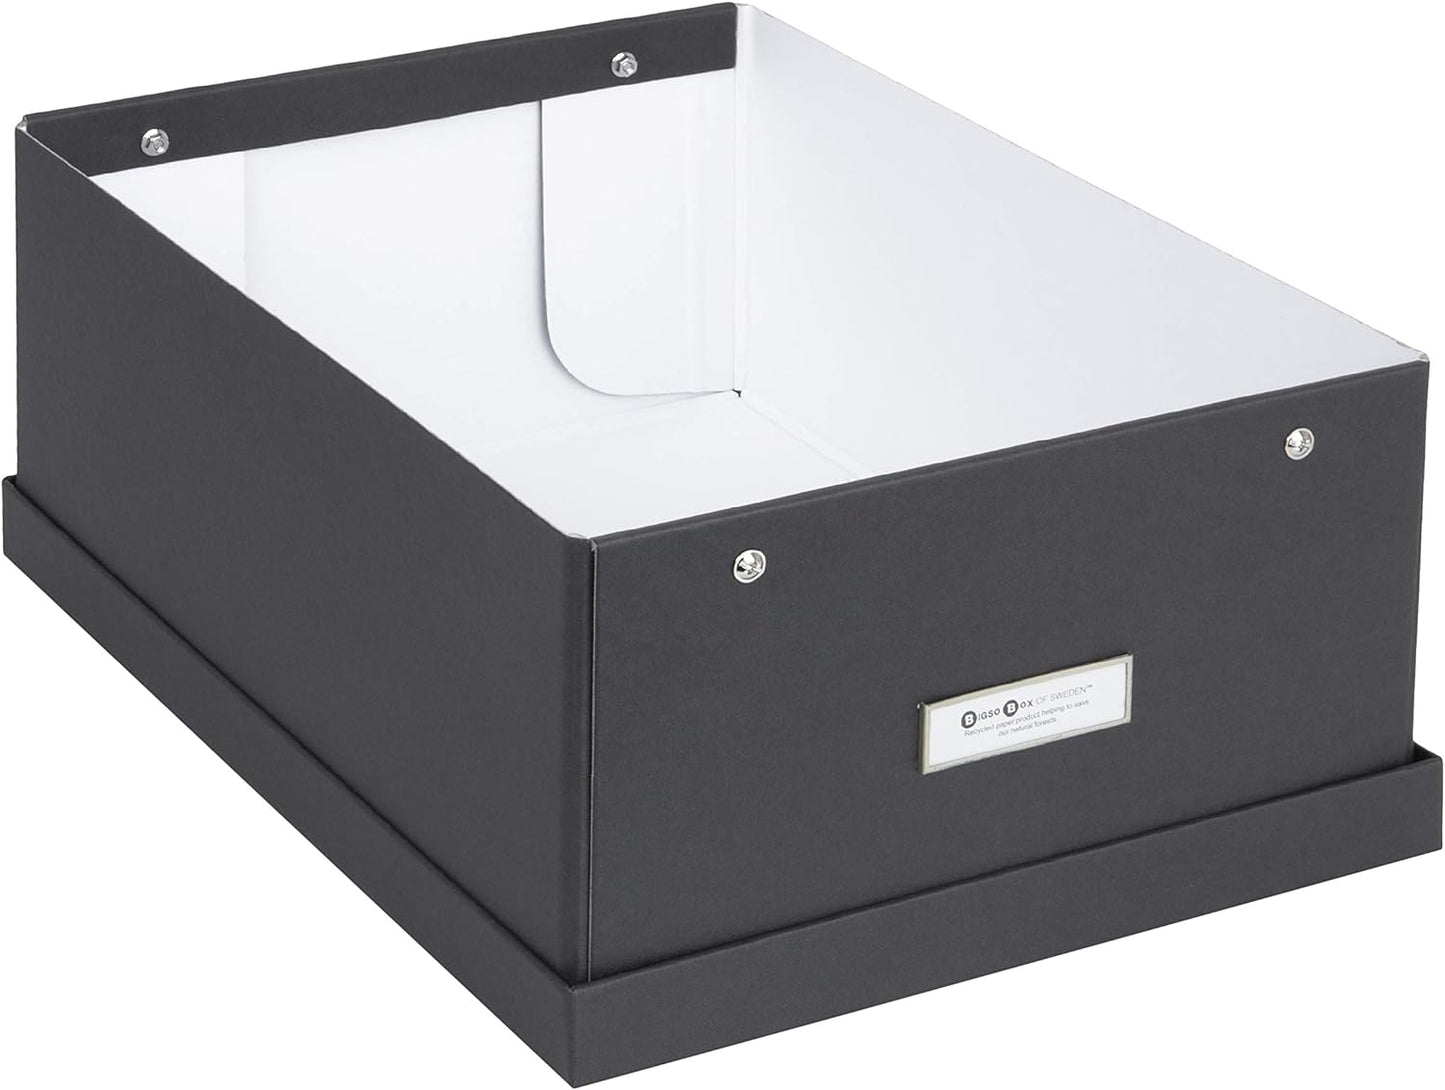 Bigso Katia Collapsible Photo Storage Box with Lid 11.3″ x 15.4″ x 6.4″